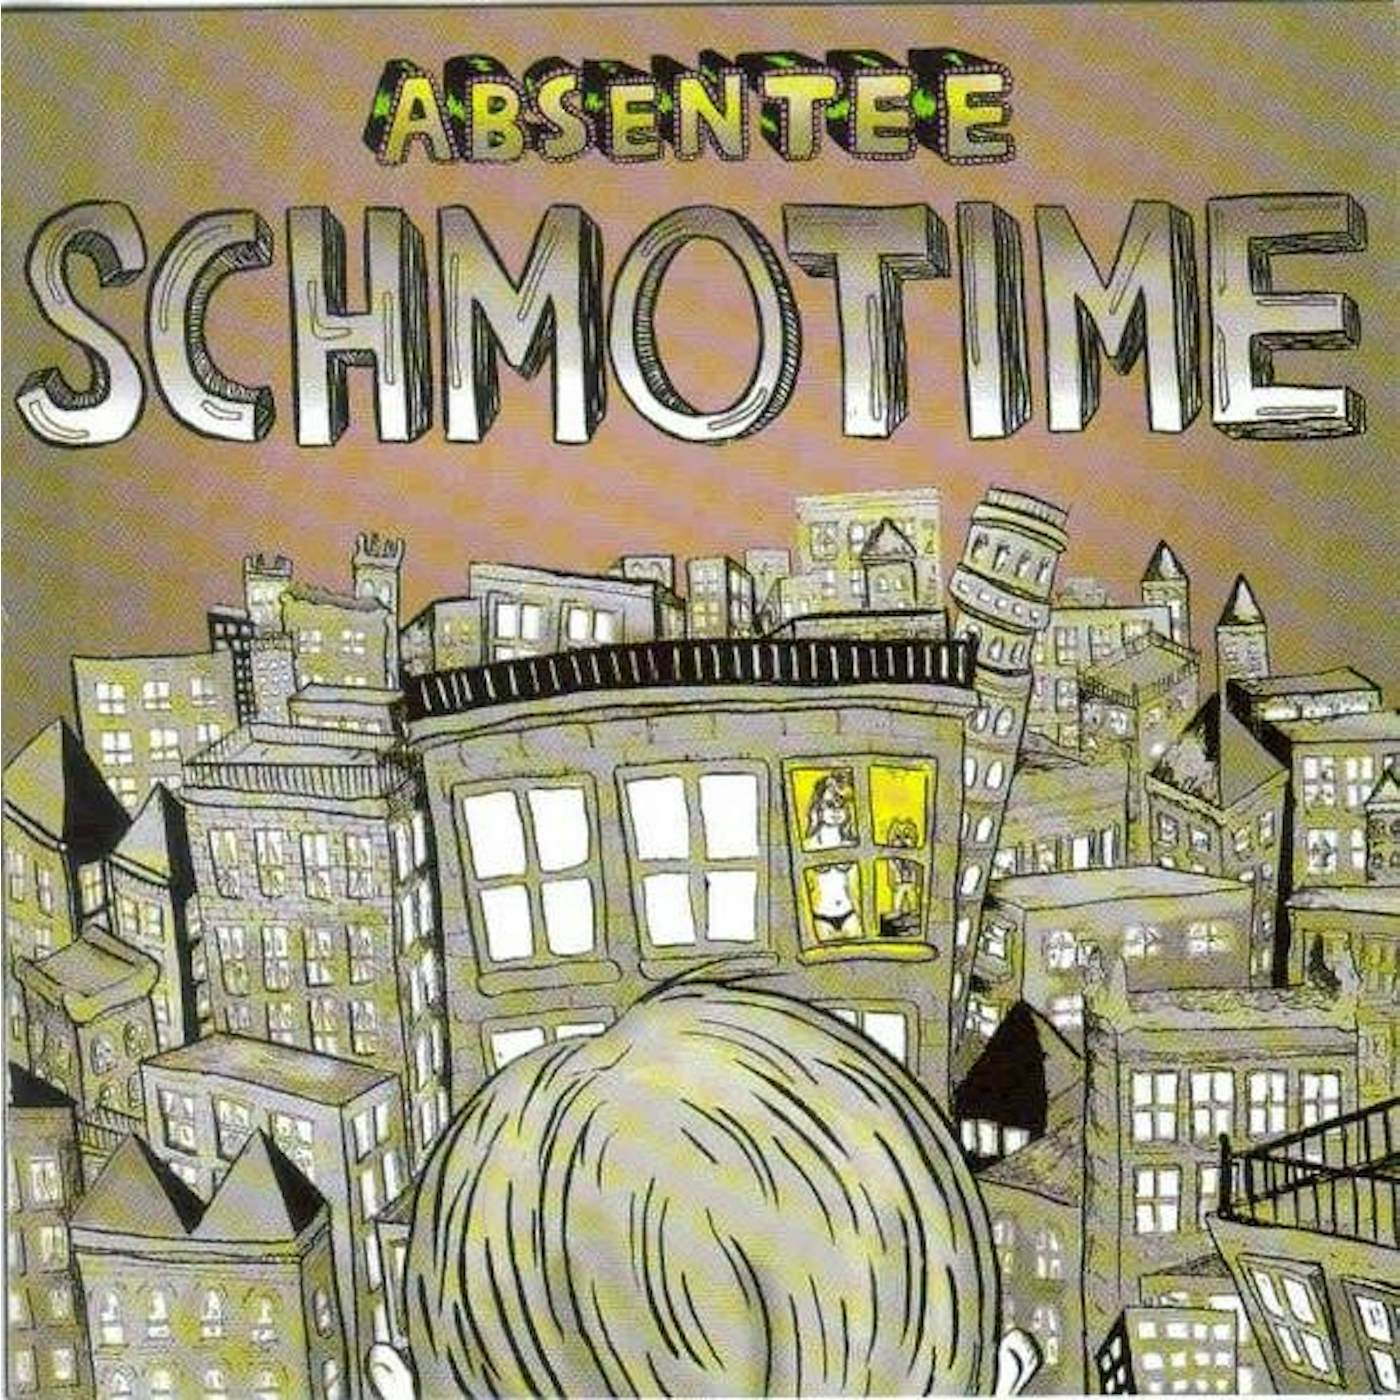 Absentee Schmotime Vinyl Record